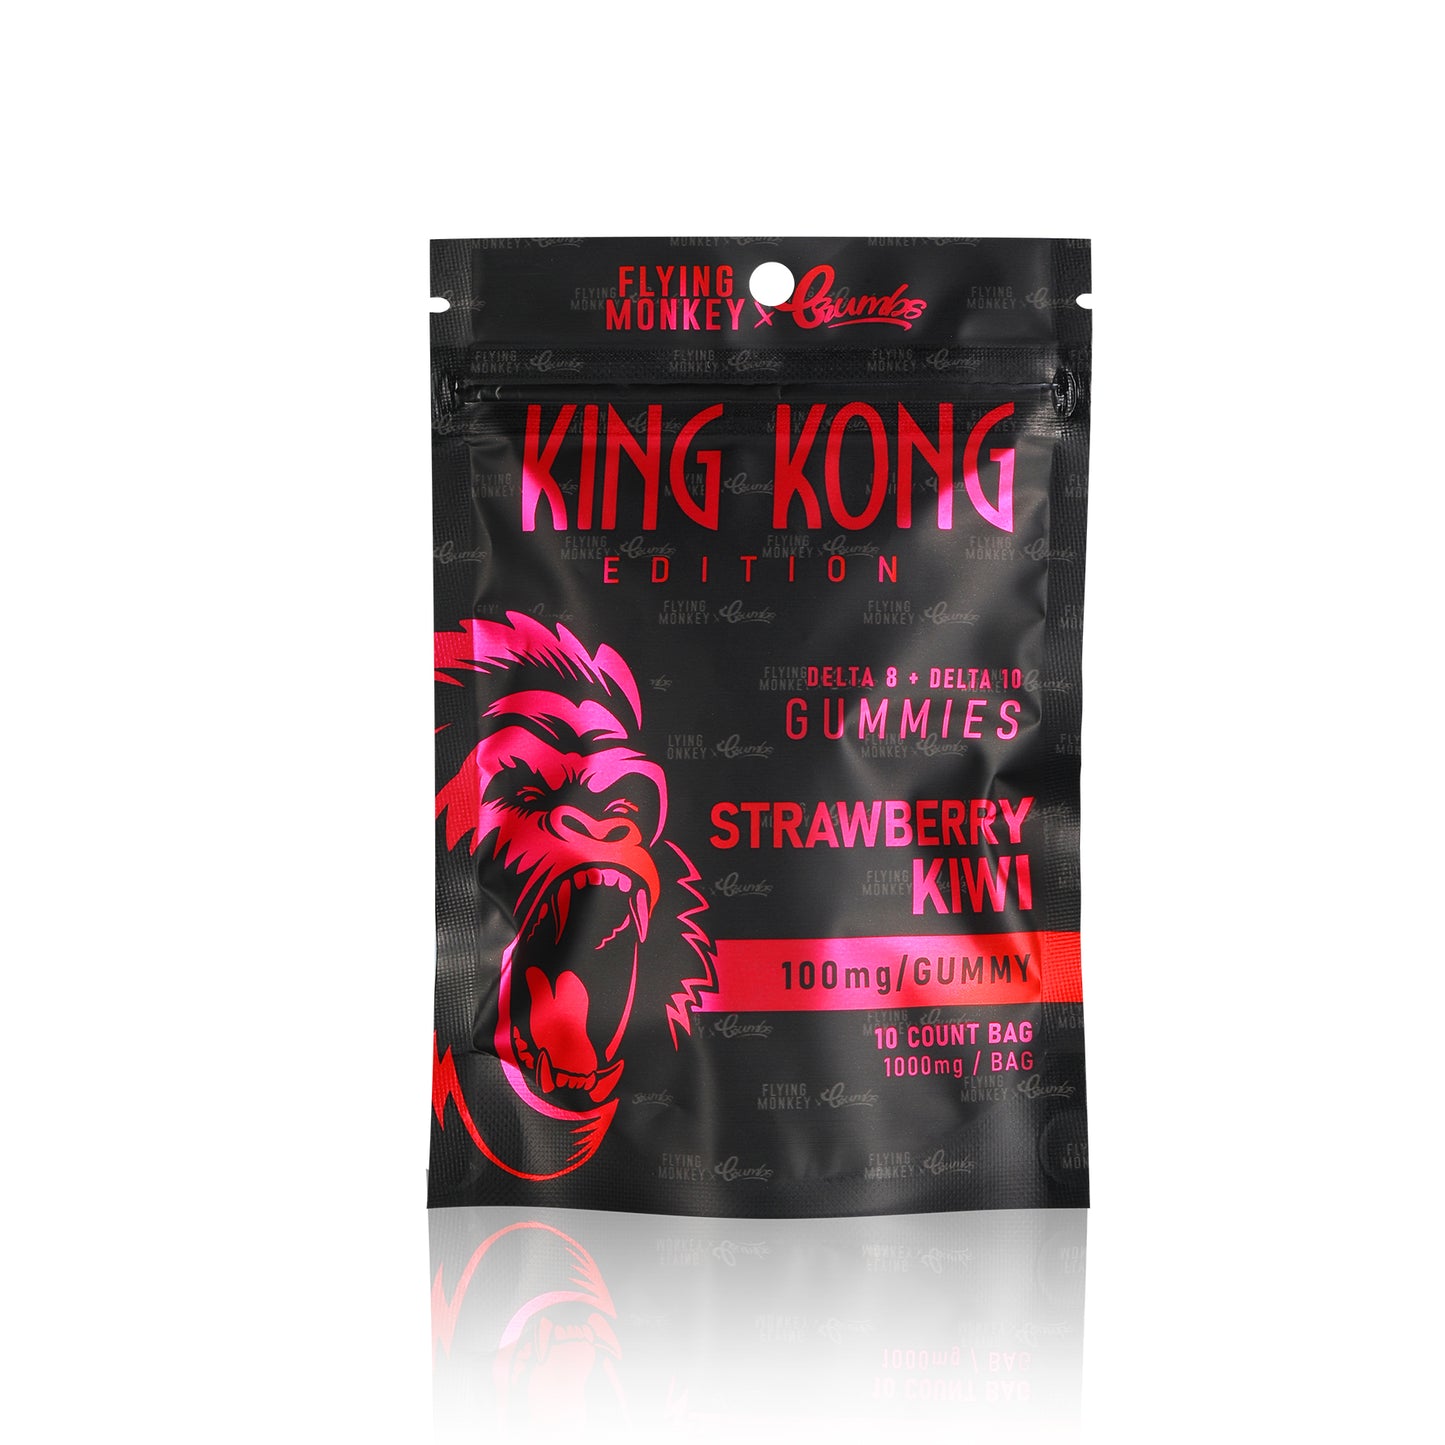 Flying Monkey King Kong 100mg gummy bag in Strawberry Kiwi flavor